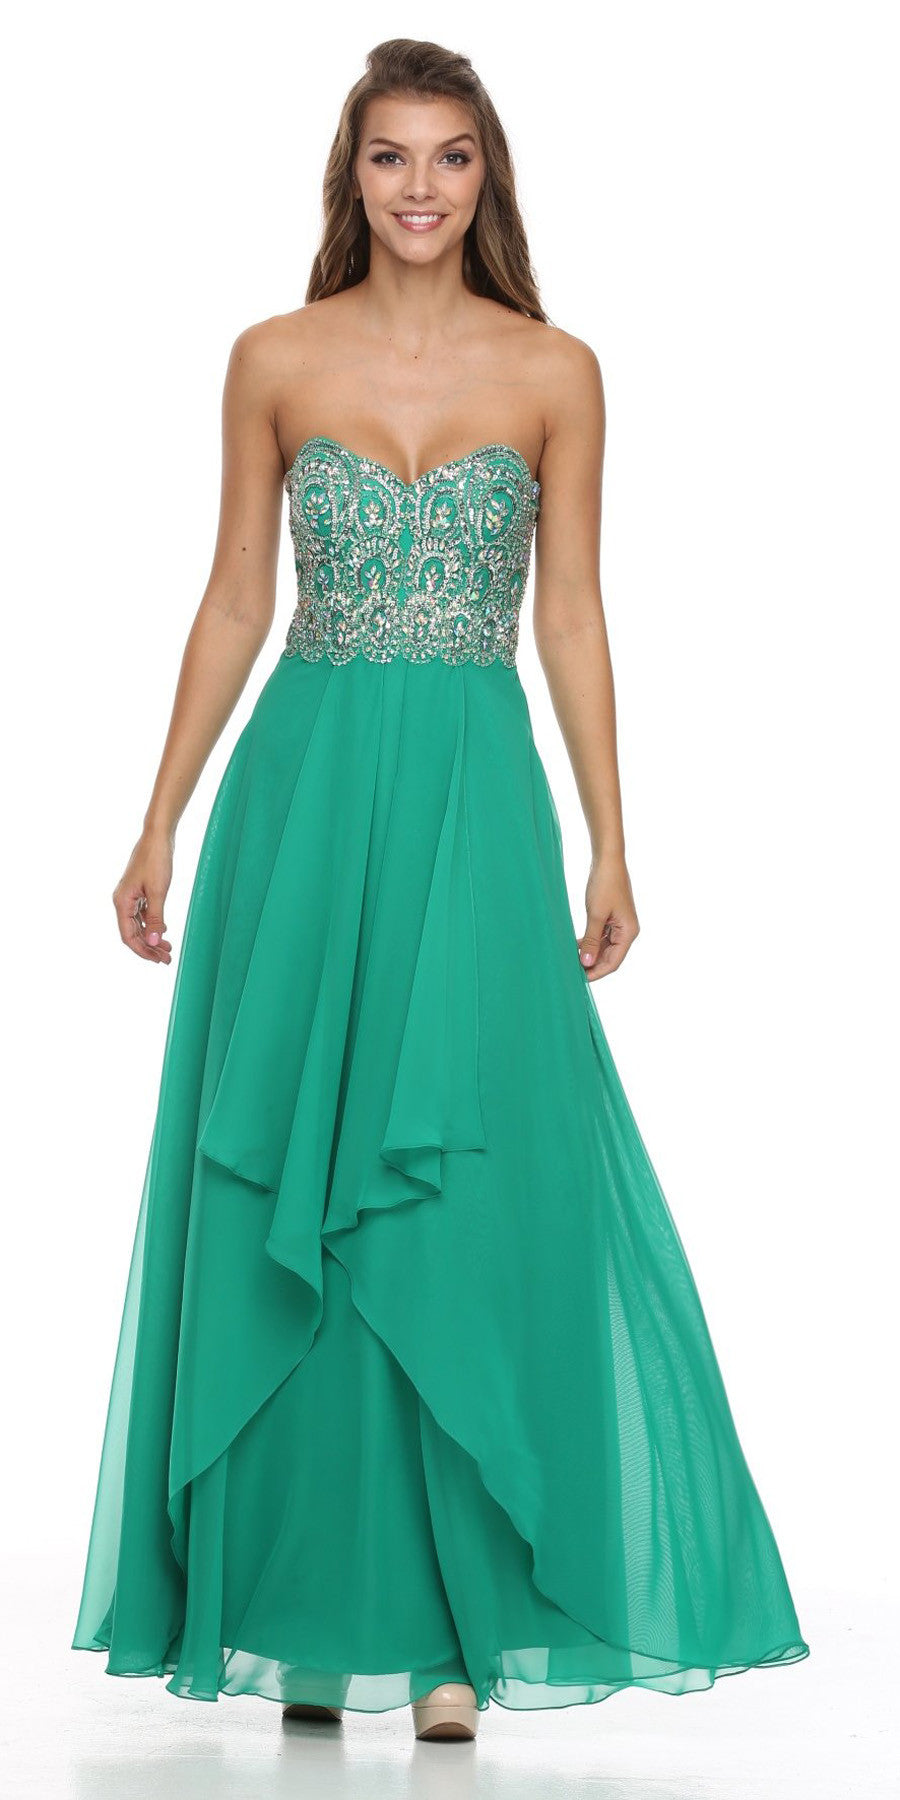 green strapless prom dress